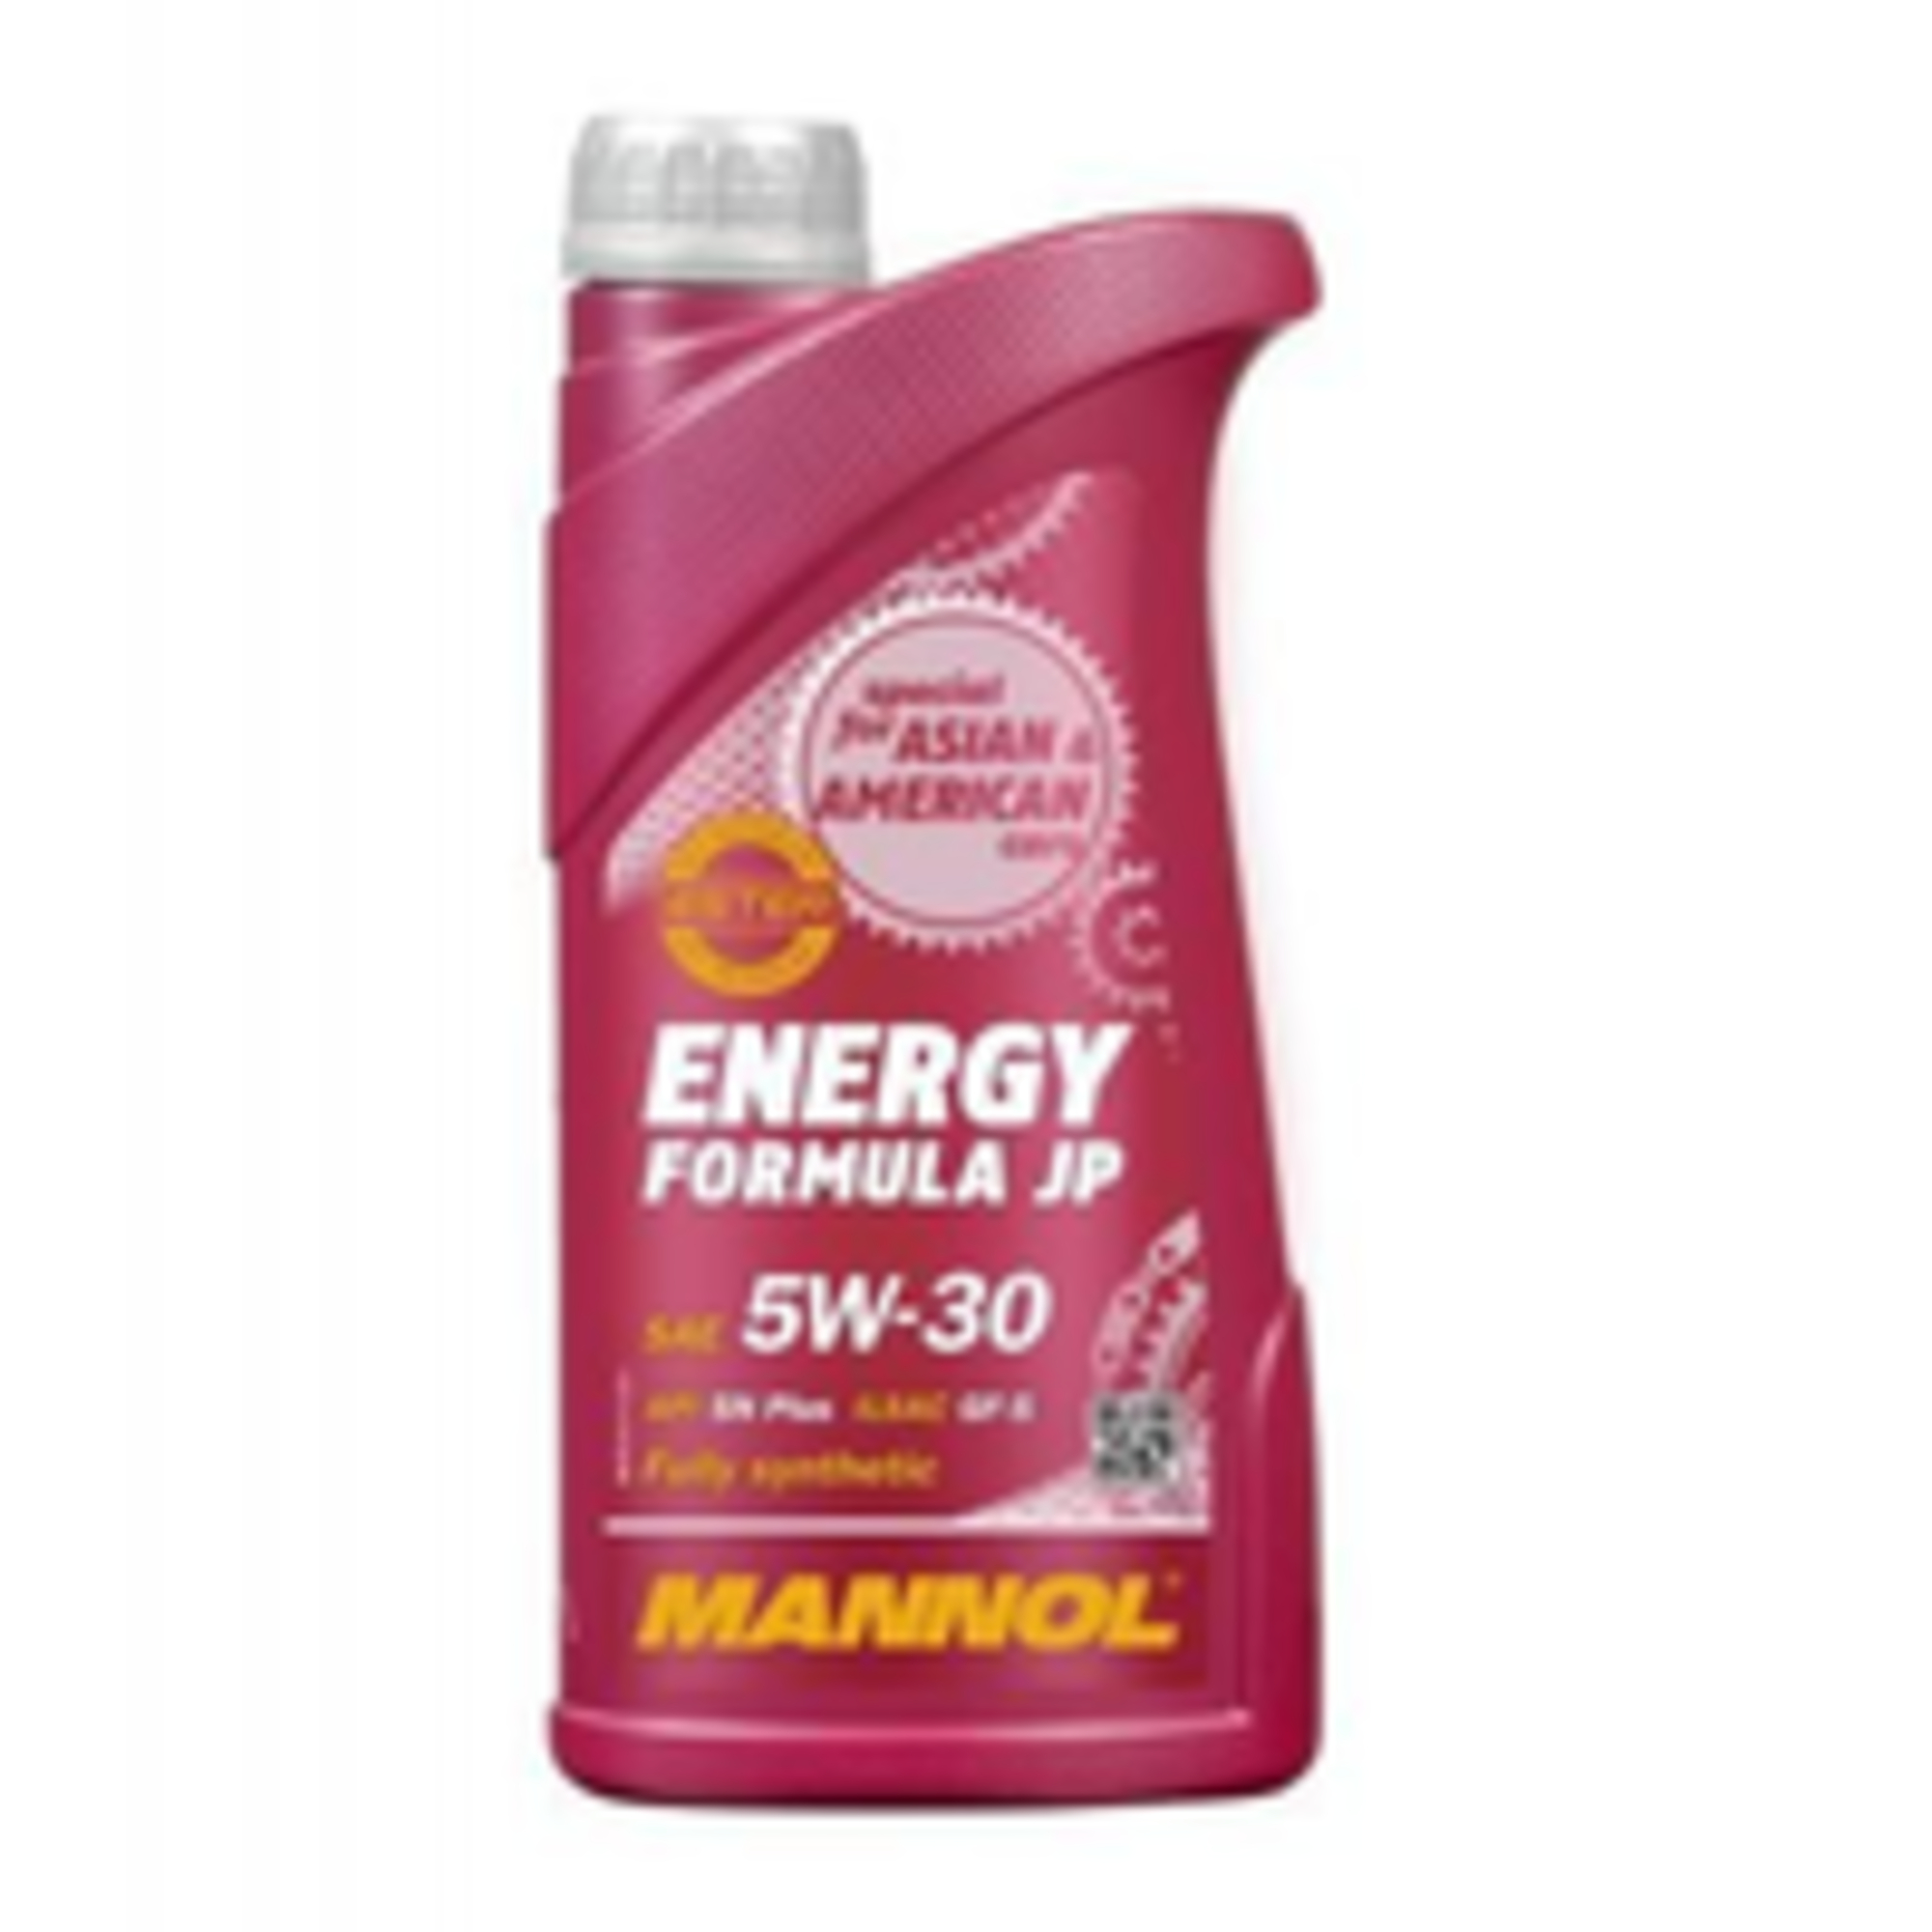 Mannol energy formula jp 5w-30- 1l